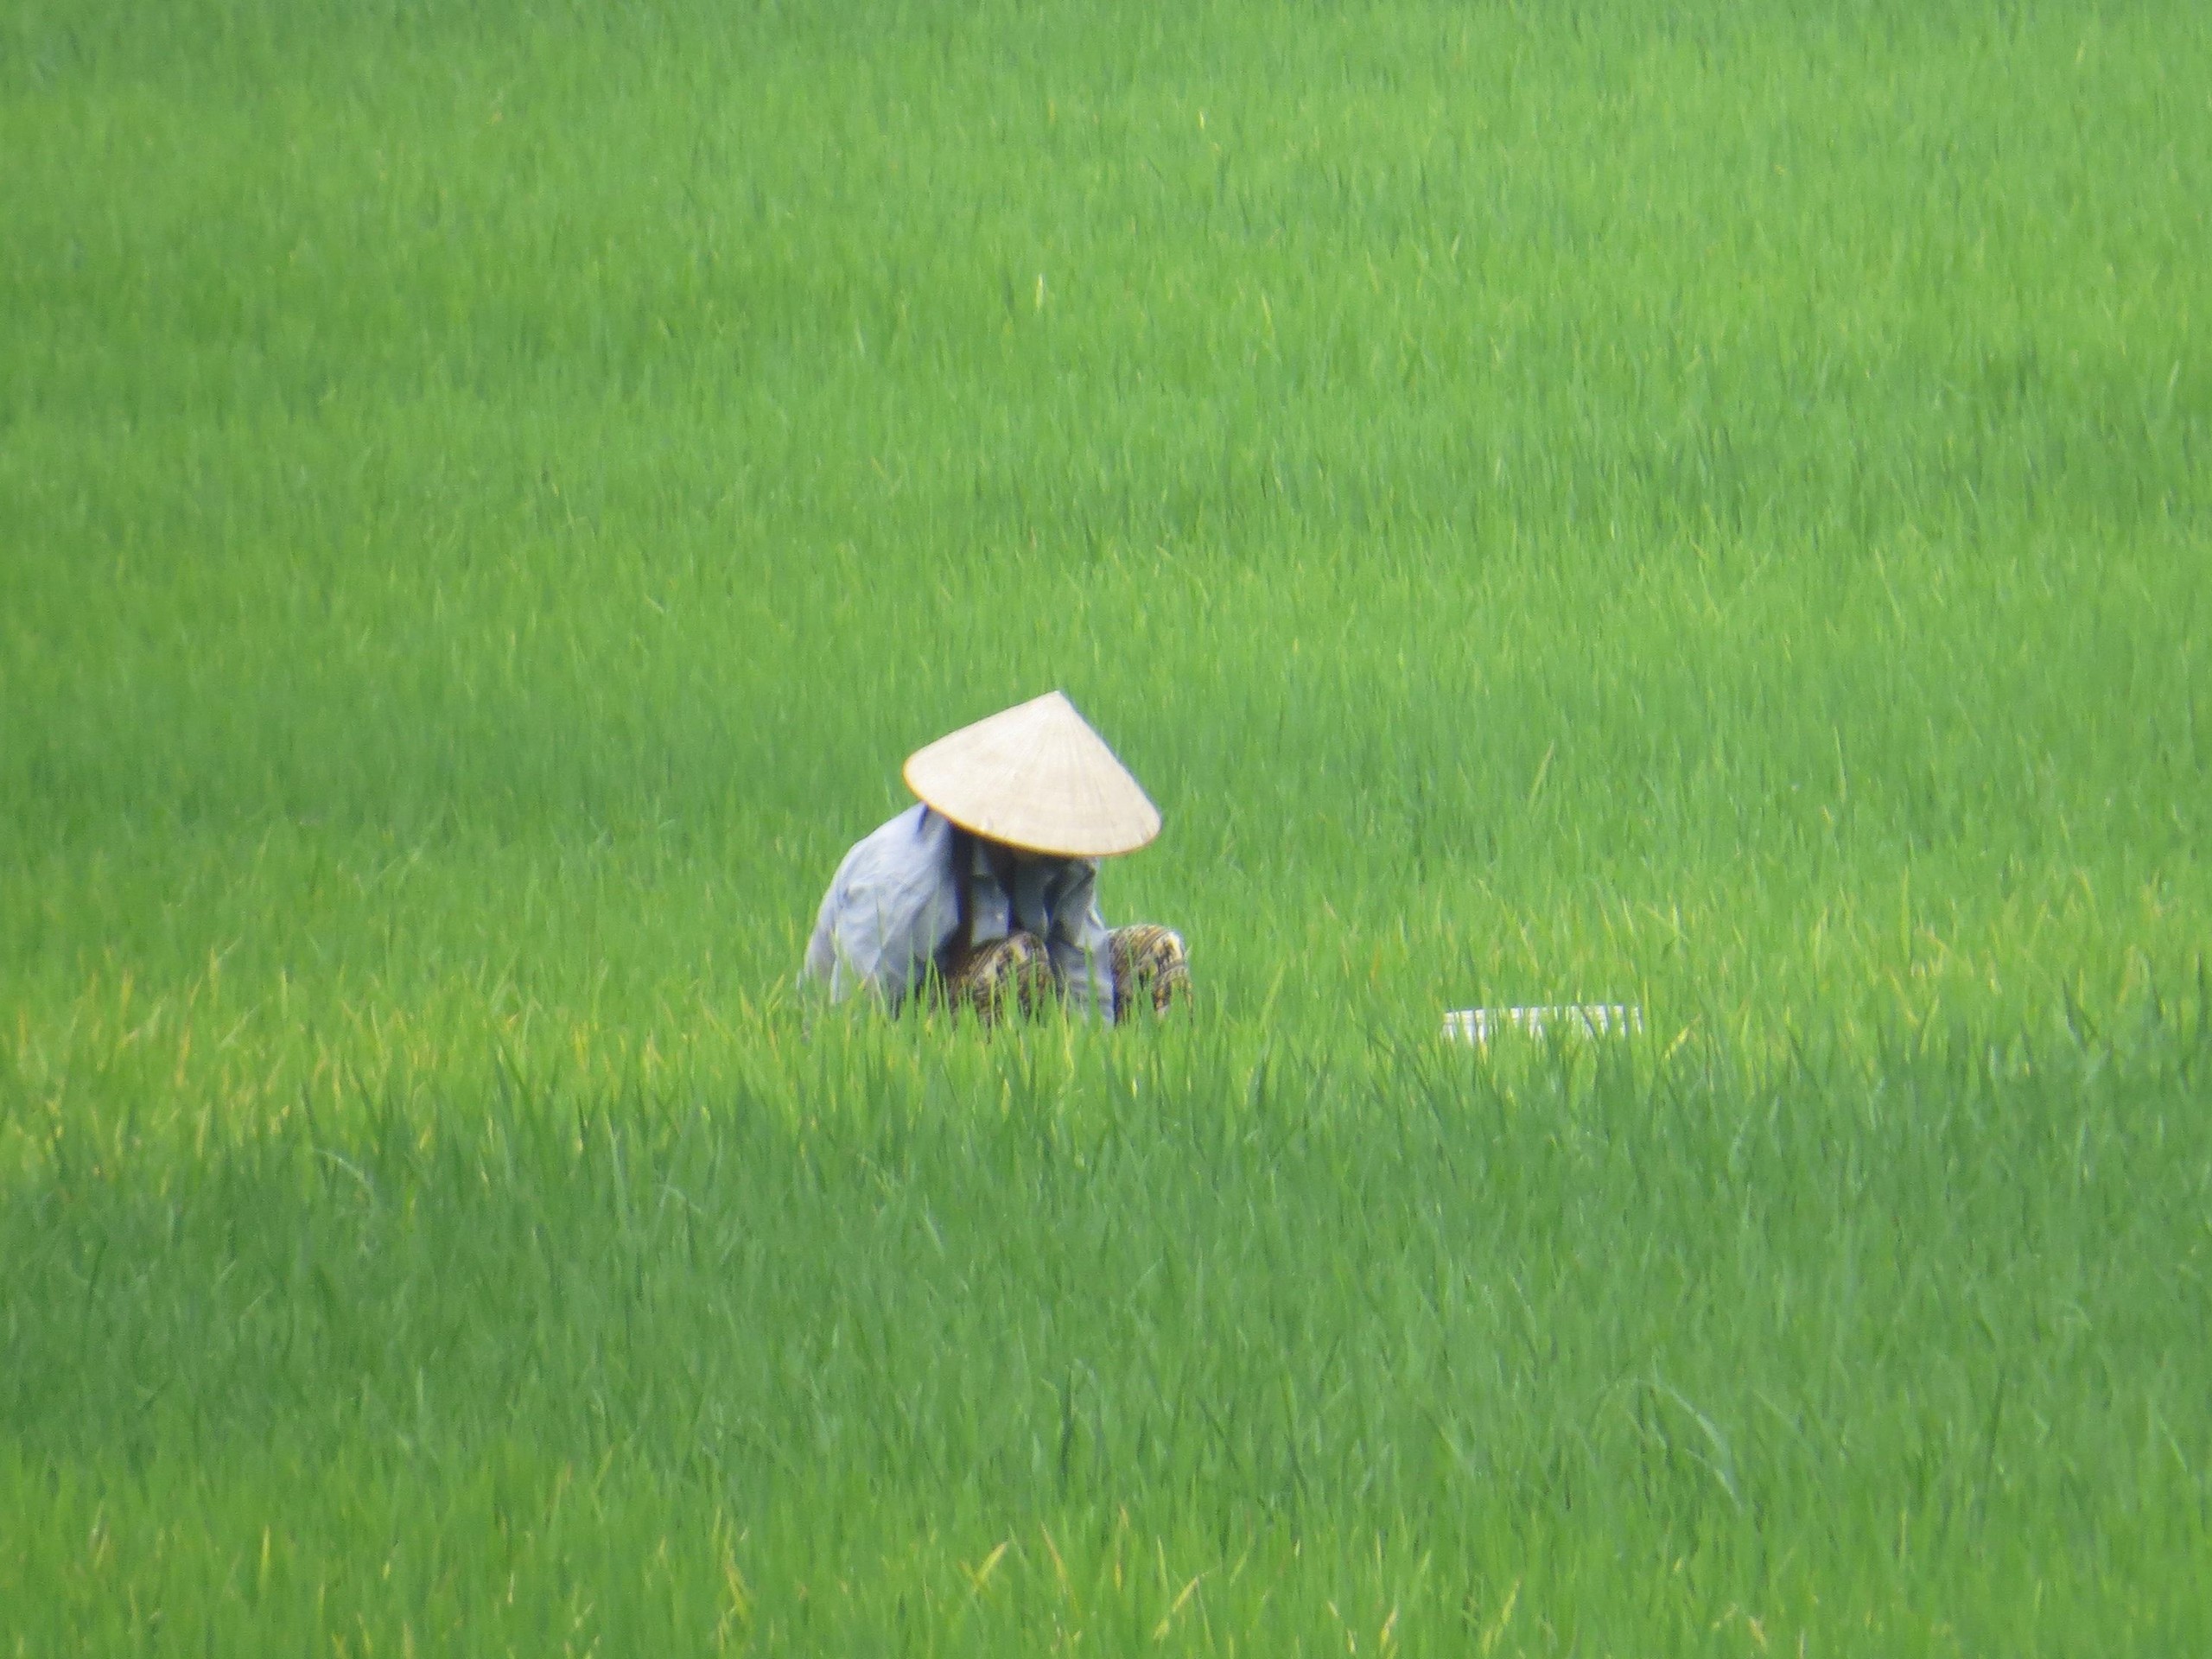 Rice field worker in Vietnam